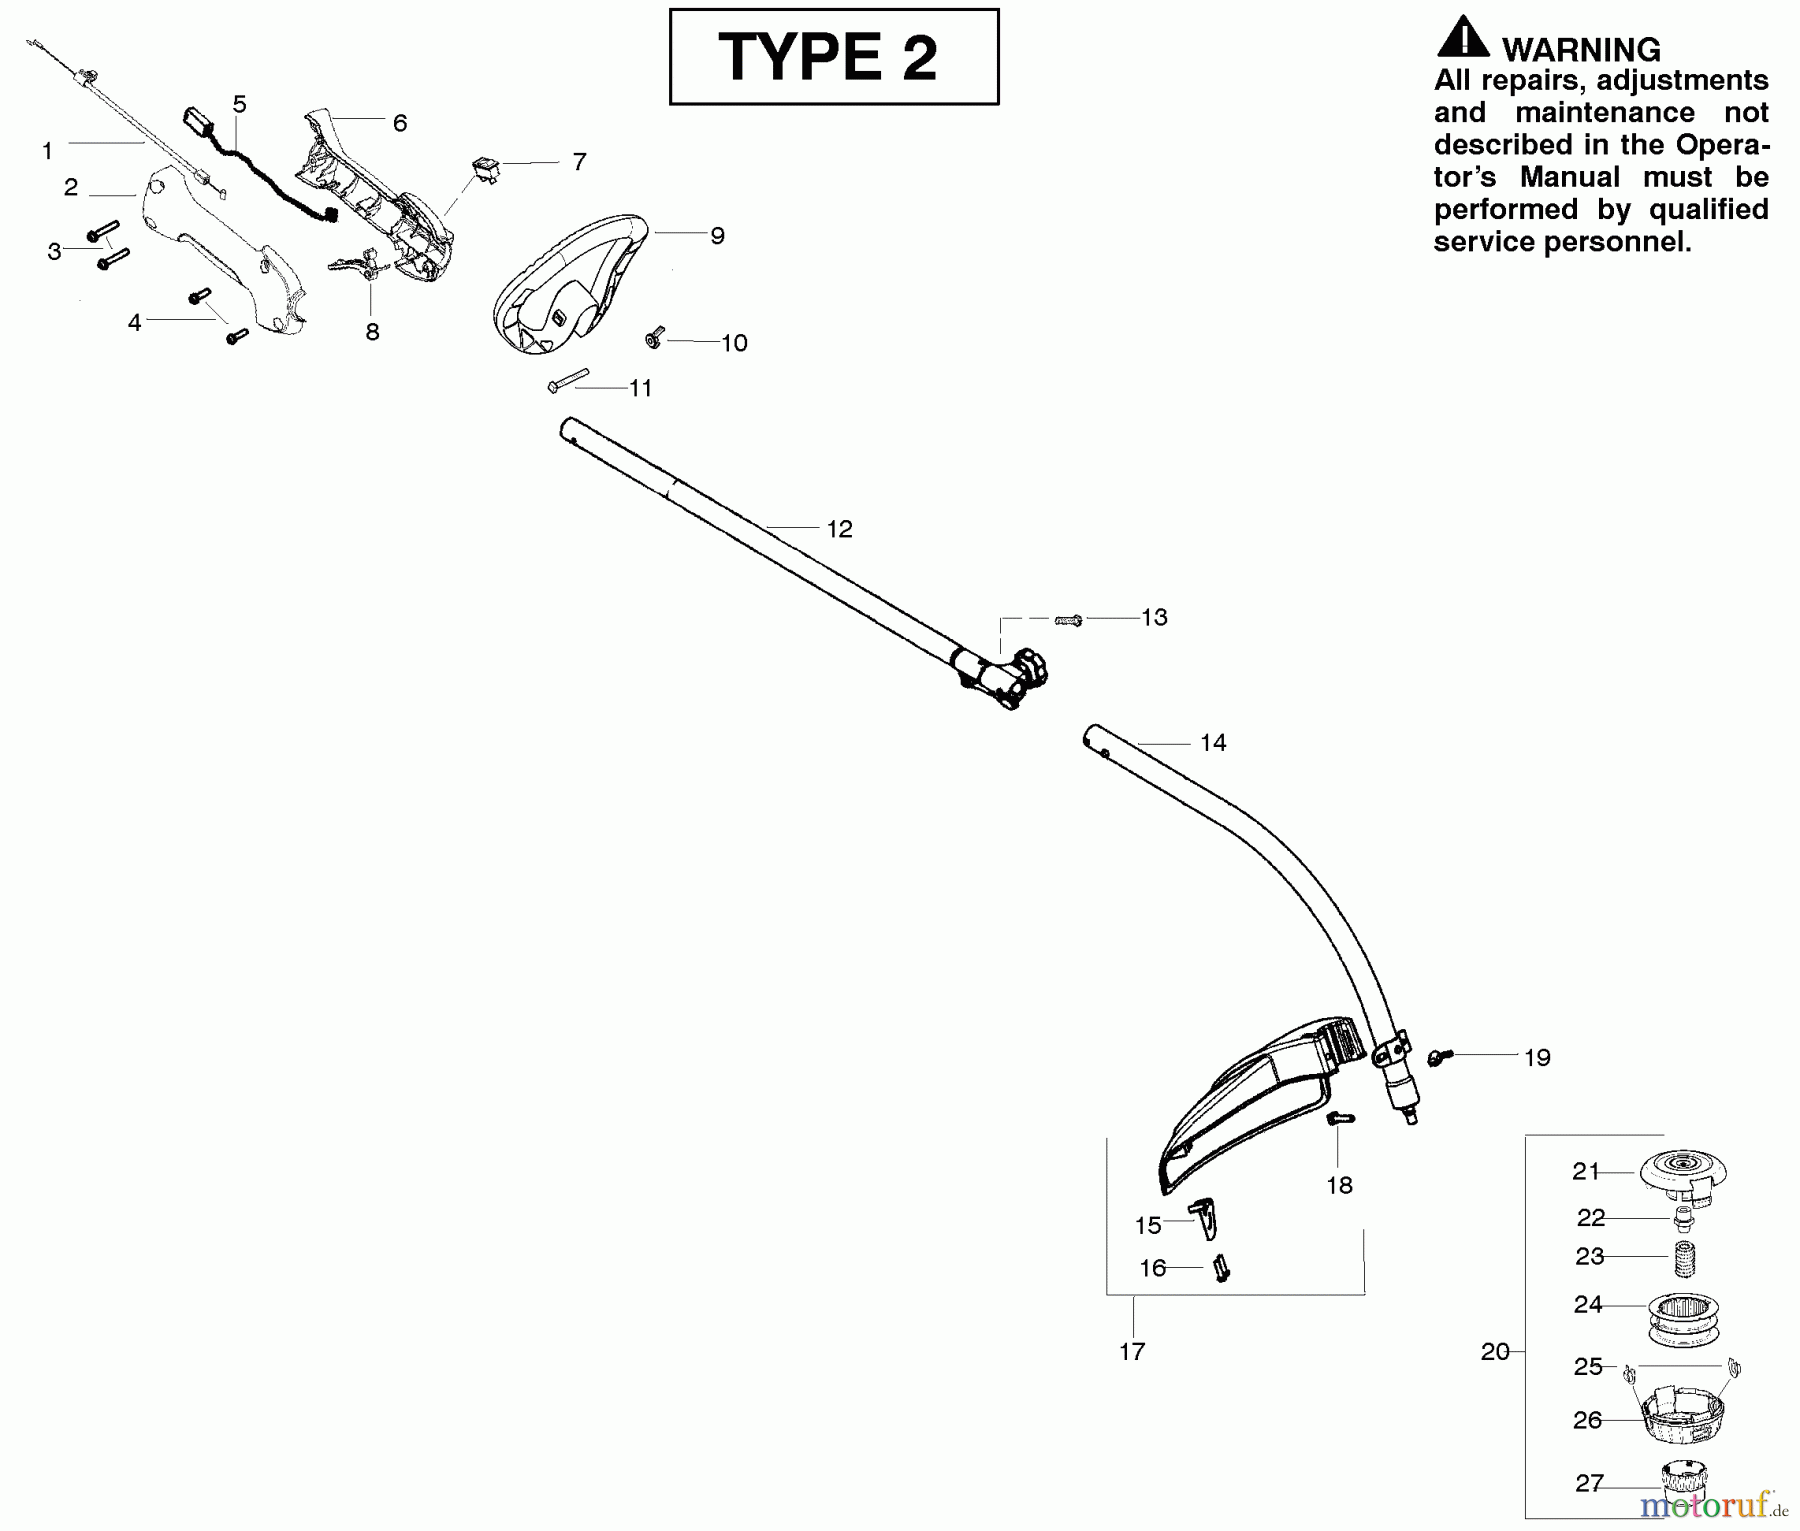  Poulan / Weed Eater Motorsensen, Trimmer PP025 (Type 2) - Poulan Pro String Trimmer Cutting Equipment Type 2